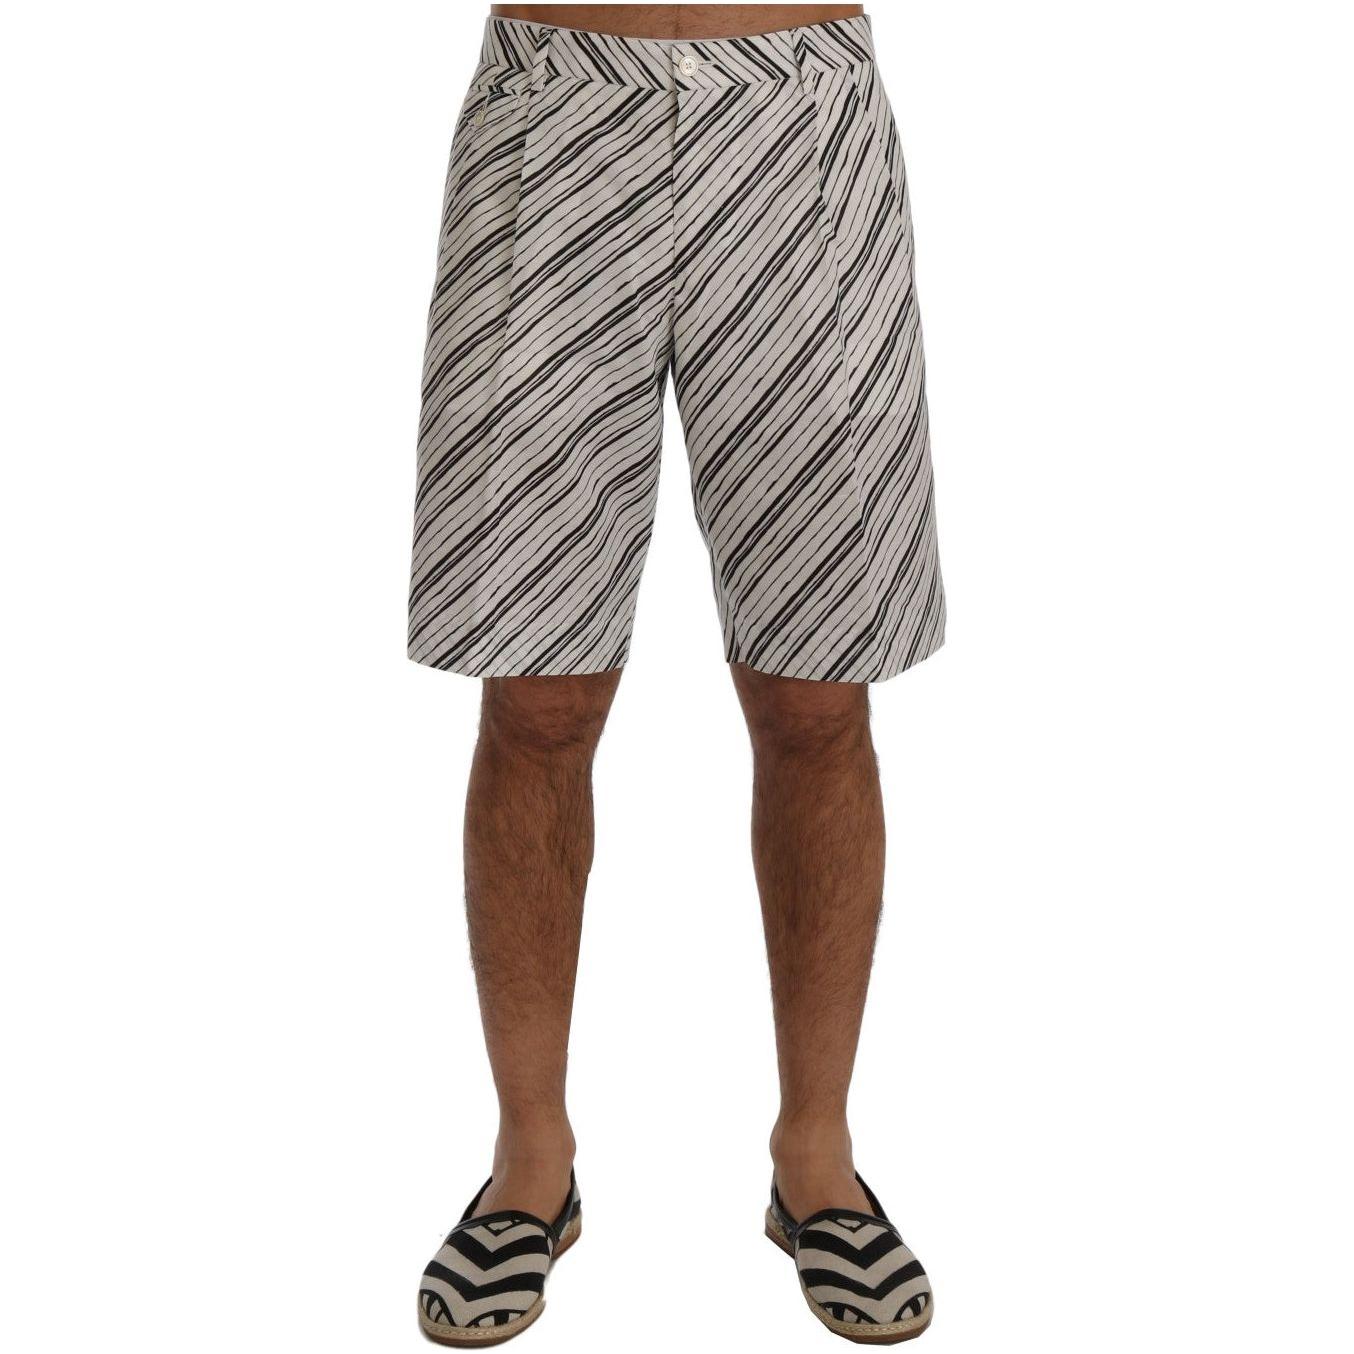 Dolce & Gabbana Elegant Striped Cotton-Linen Shorts white-black-striped-casual-shorts-1 443622-white-black-striped-casual-shorts-2.jpg